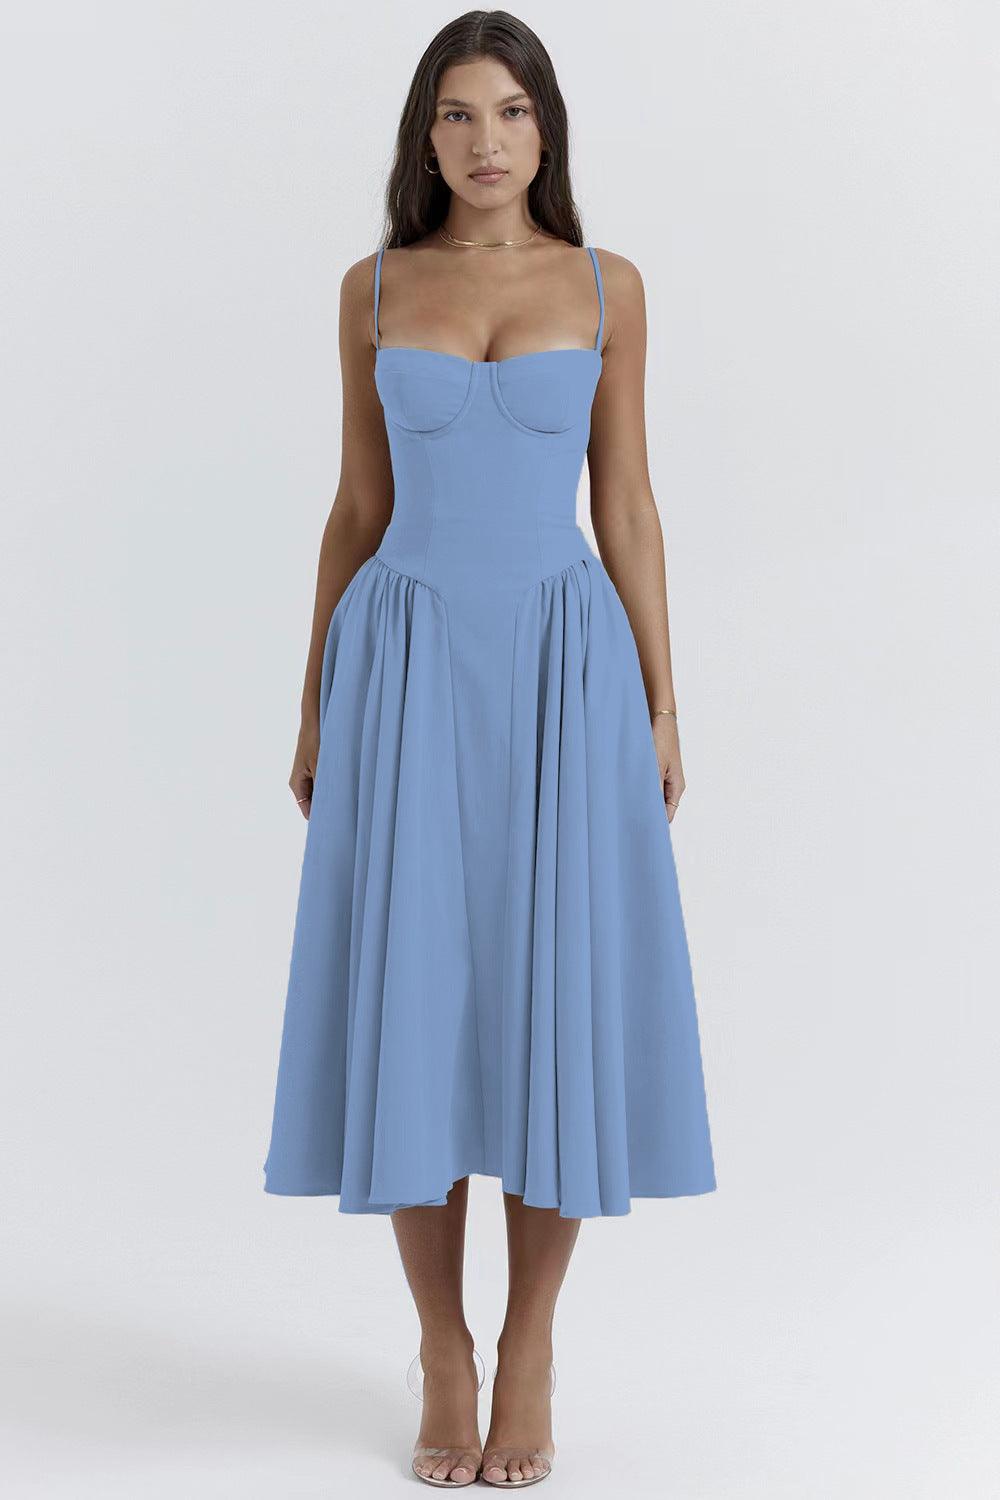 Elegant Low-Cut Slim Backless Summer Dress for Women - Glinyt